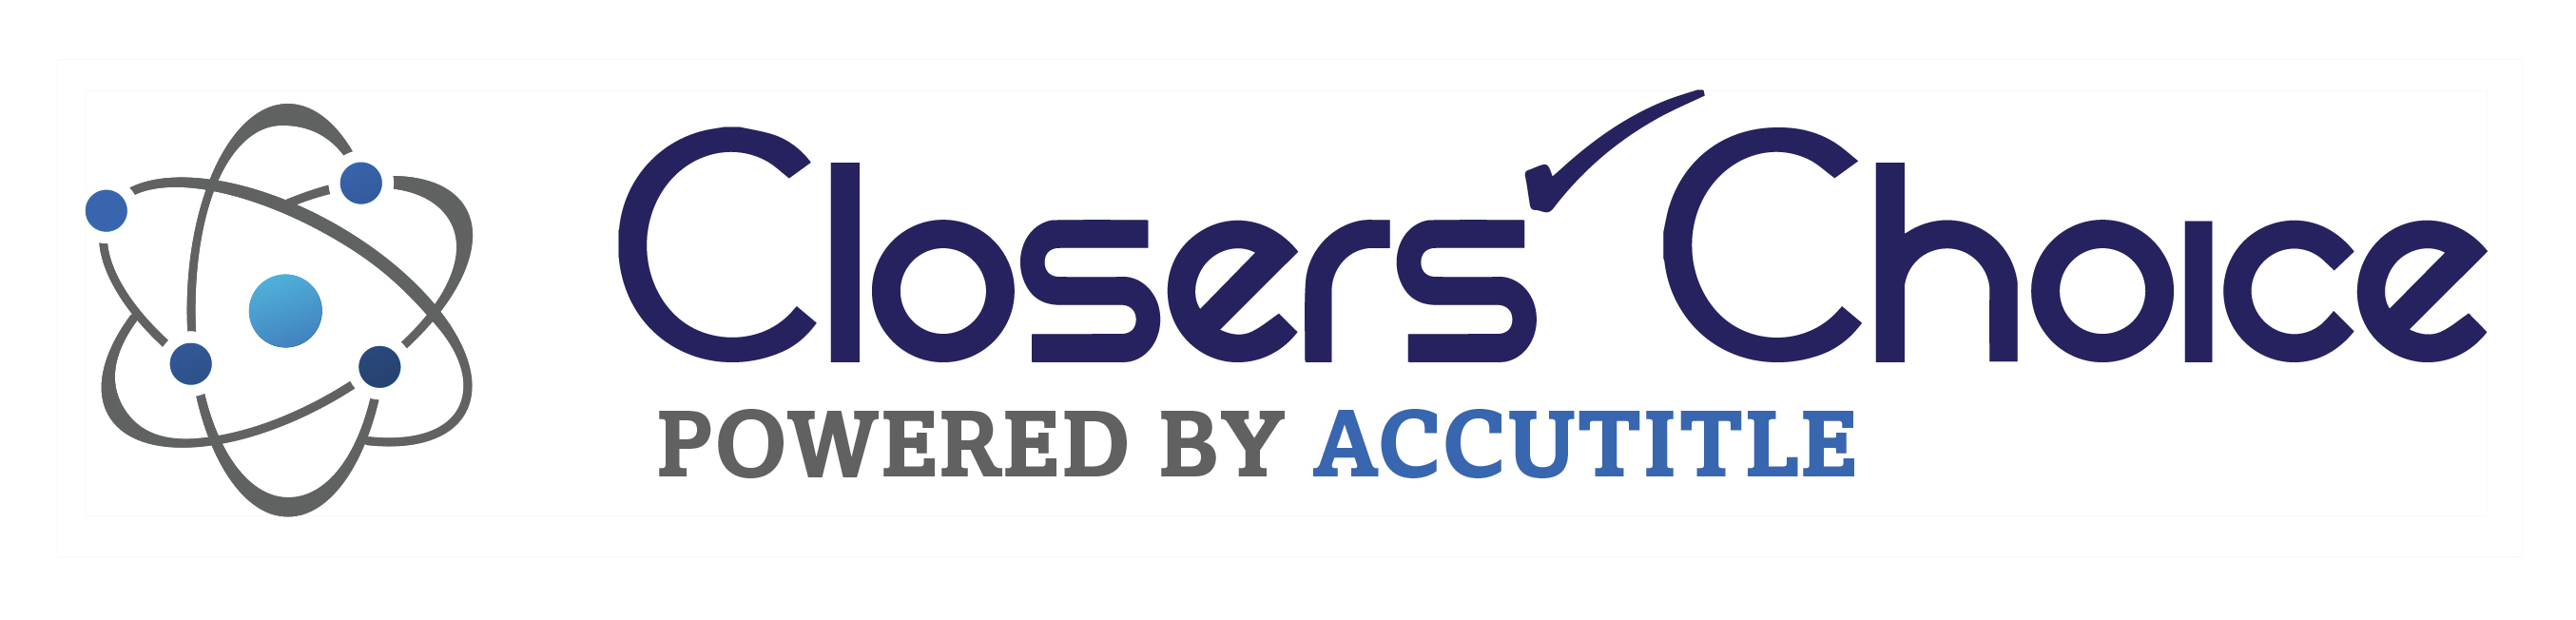 Closers Choice Logo